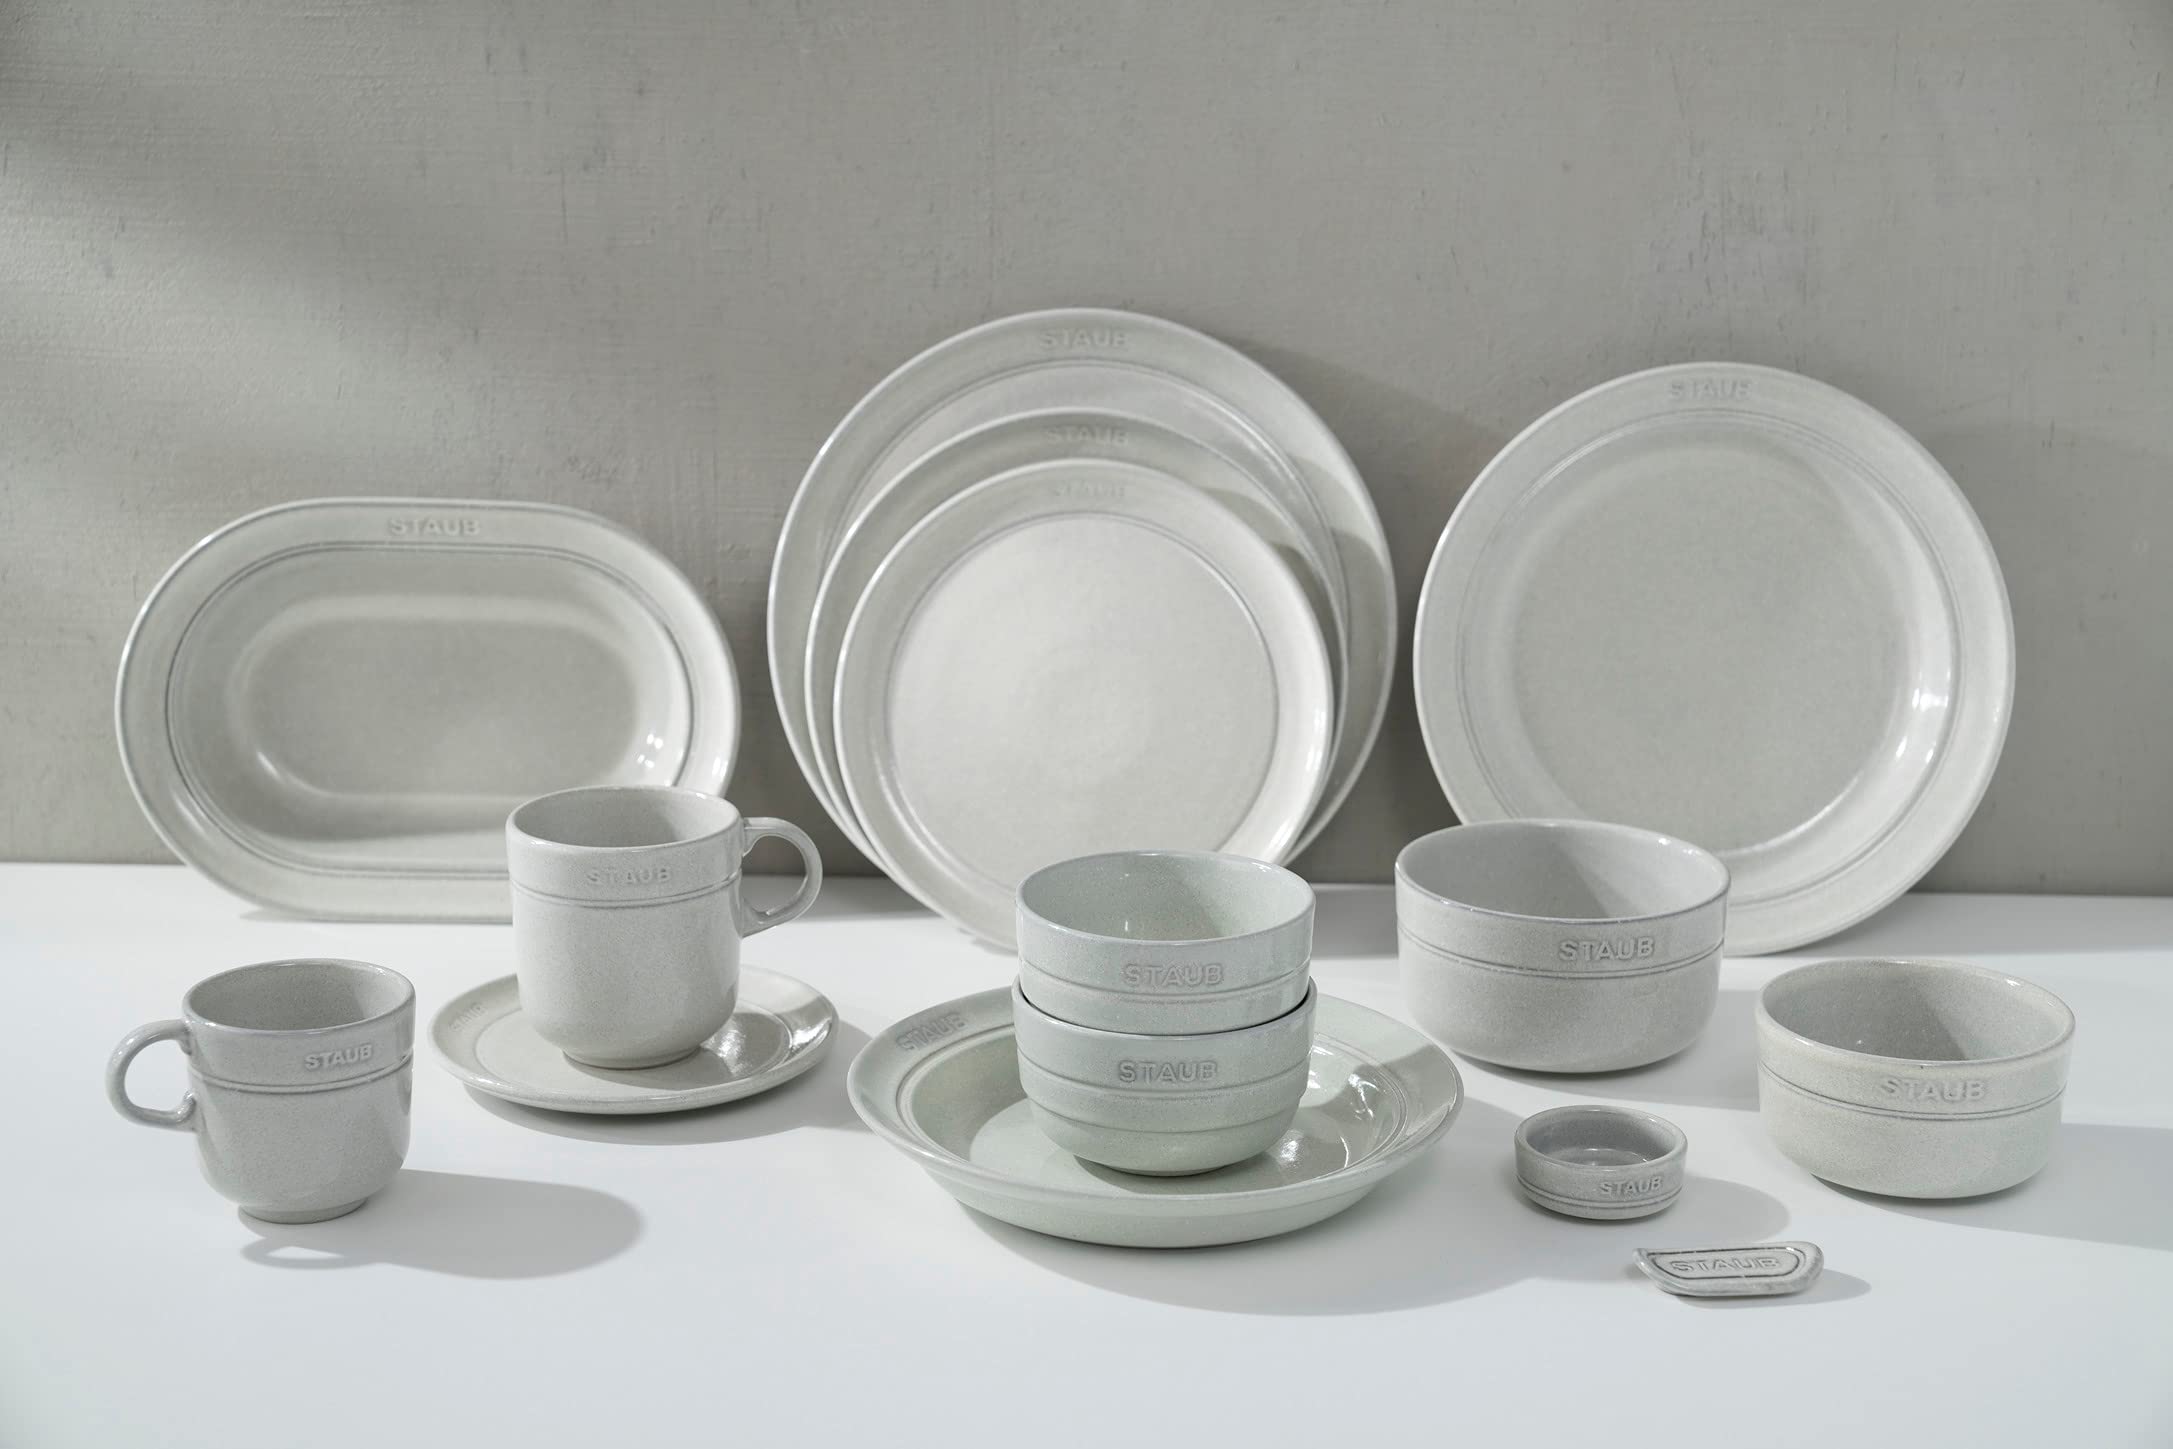 Staub 40508-030 Oval Plate, 9.8 inches (25 cm), Campane, Curry Dish, Oval, Ceramic, Ceramic, Microwave-Safe